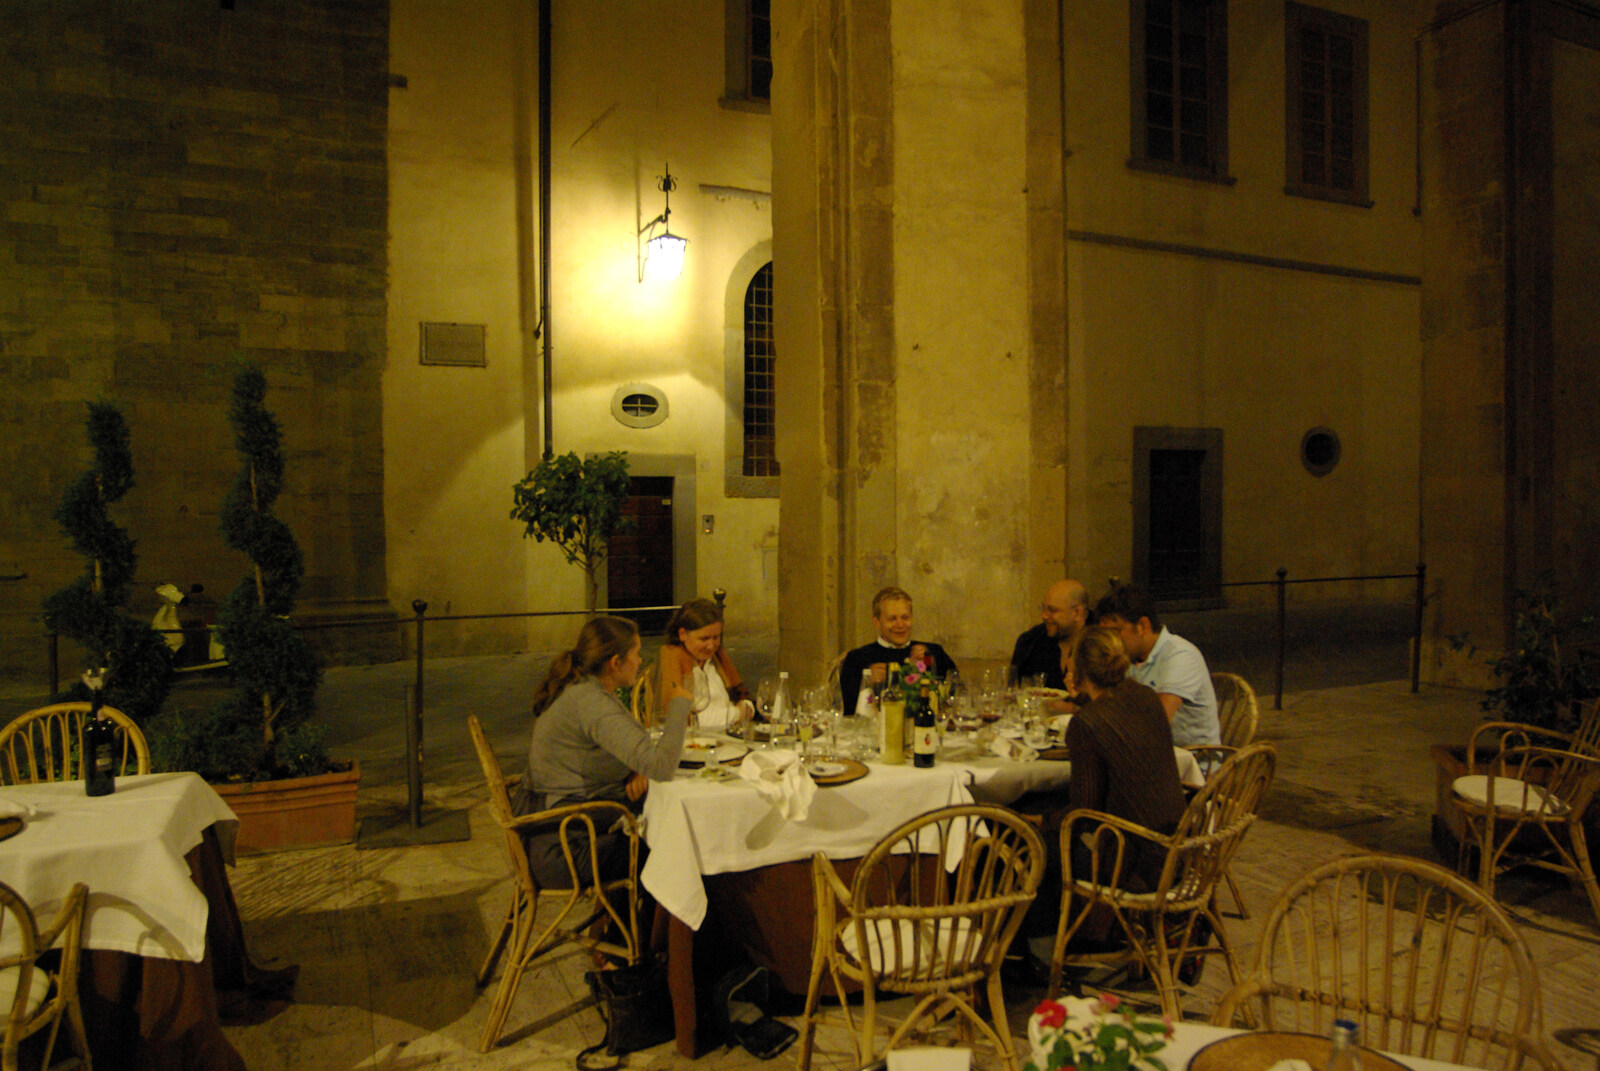 Tenuta Il Palazzo in Arezzo, Tuscany, Italy - 22nd July 2008: Piazza restaurant